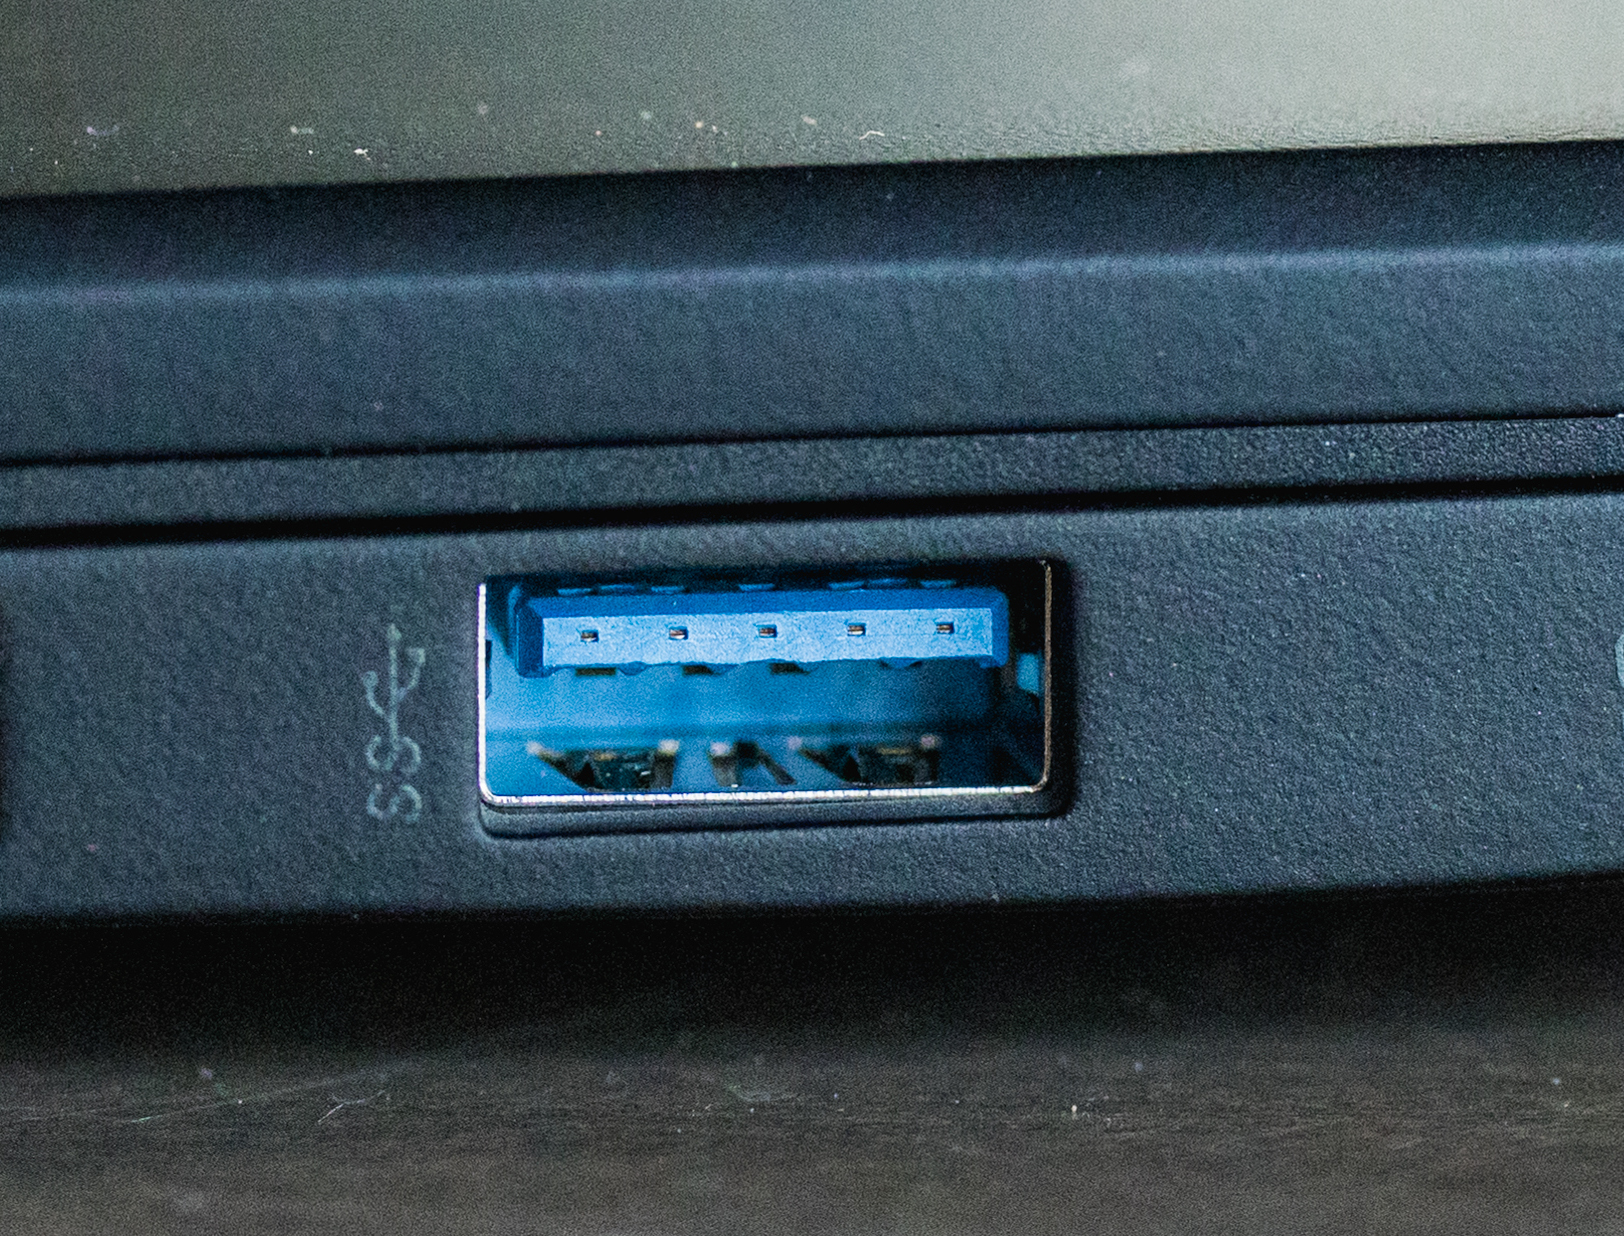 پورت USB 3.0